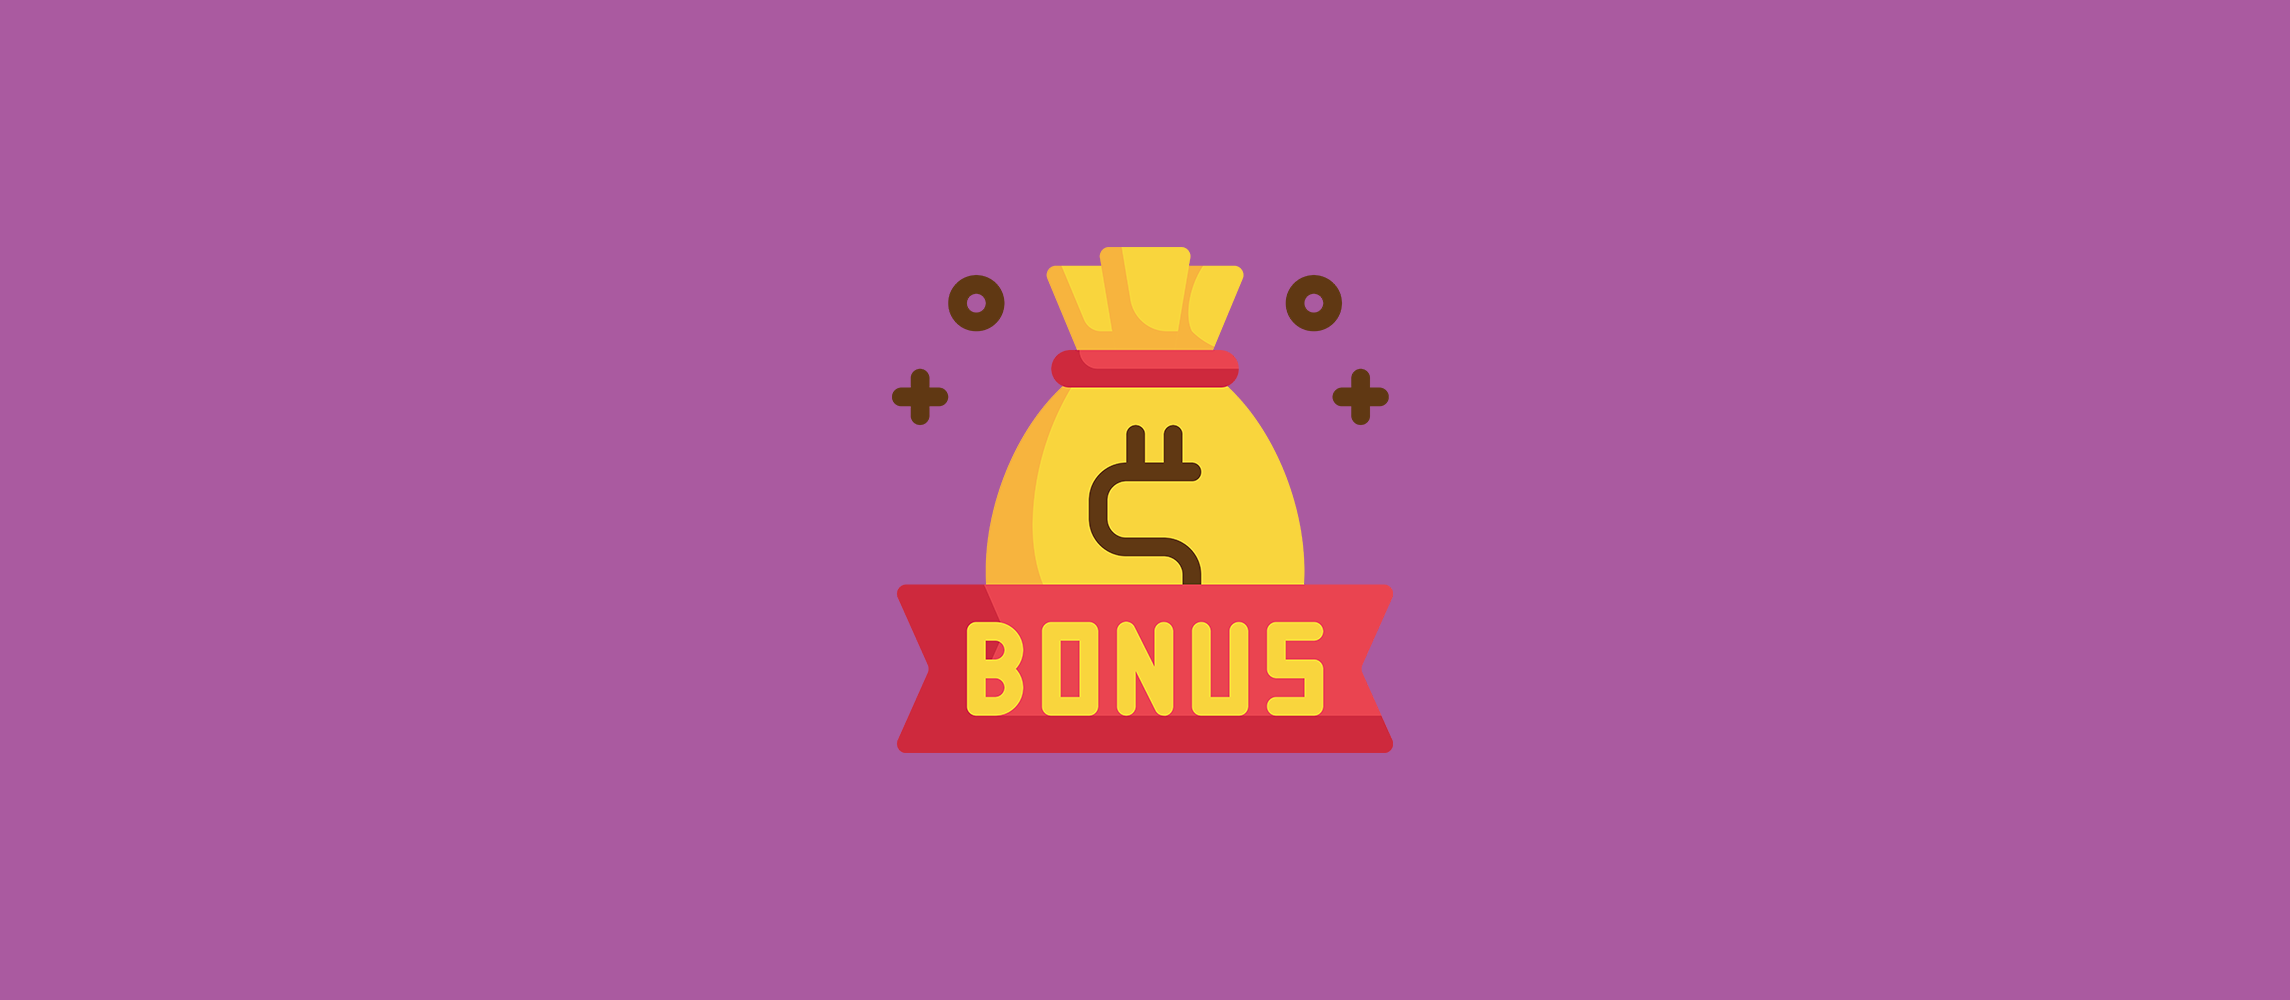 best online casino free bonus no deposit